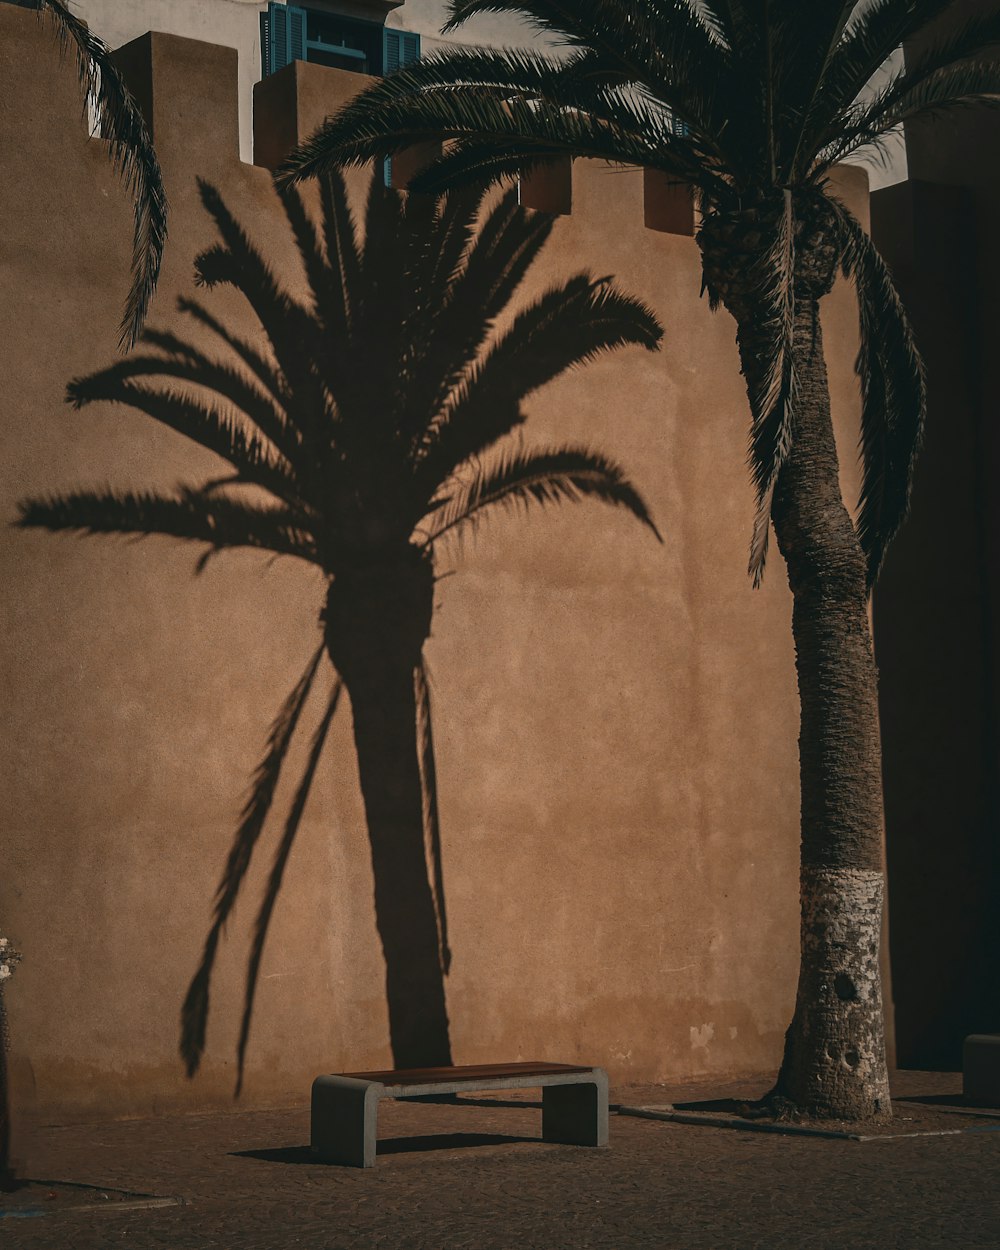 a palm tree casts a shadow on a wall